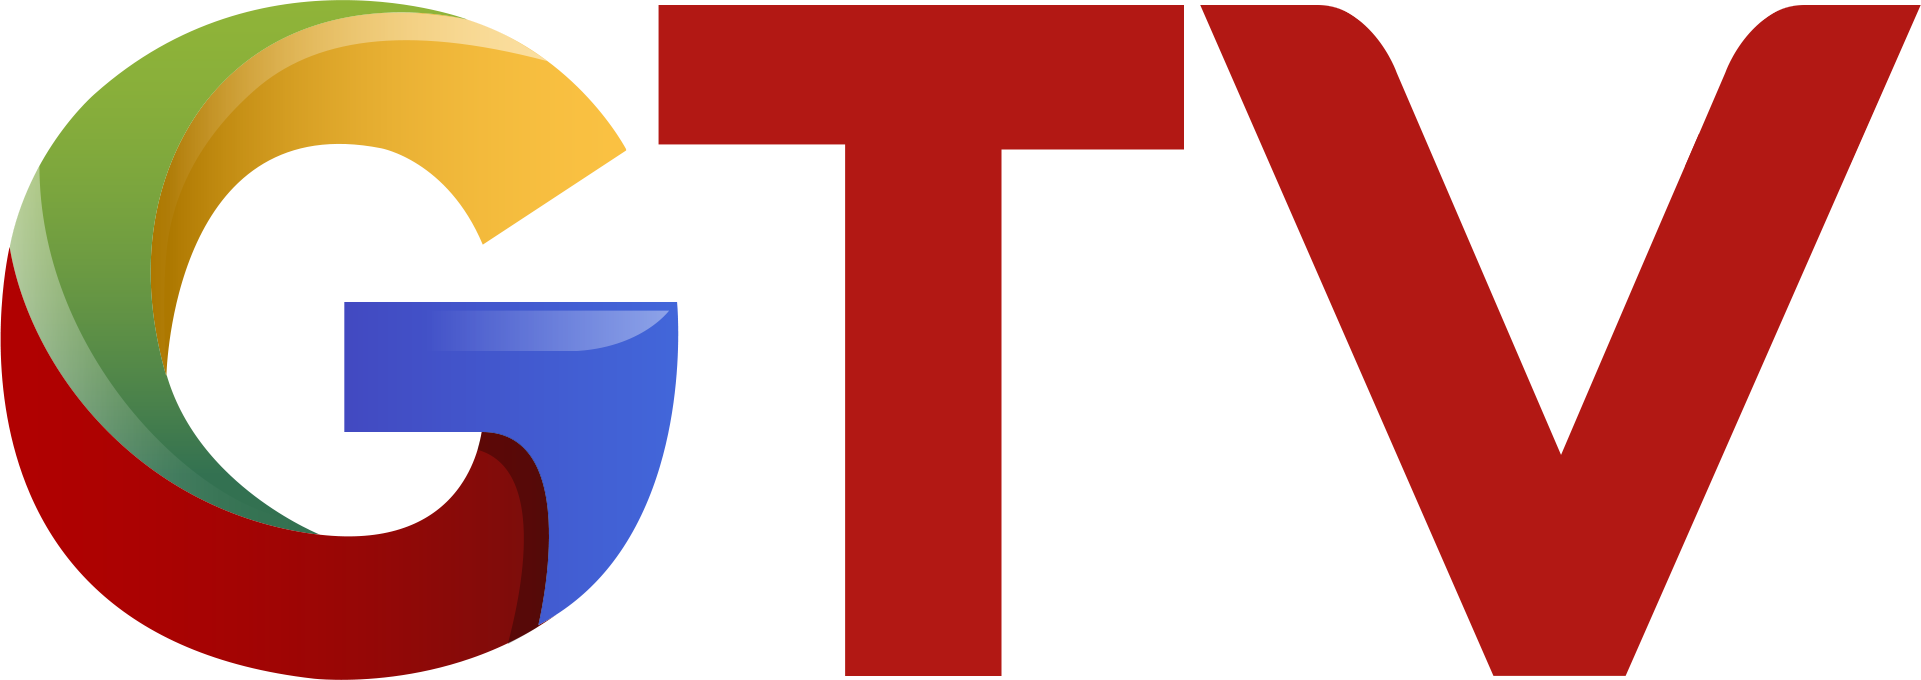 Gtv Logo - Gtv Indonesia (1921x680), Png Download